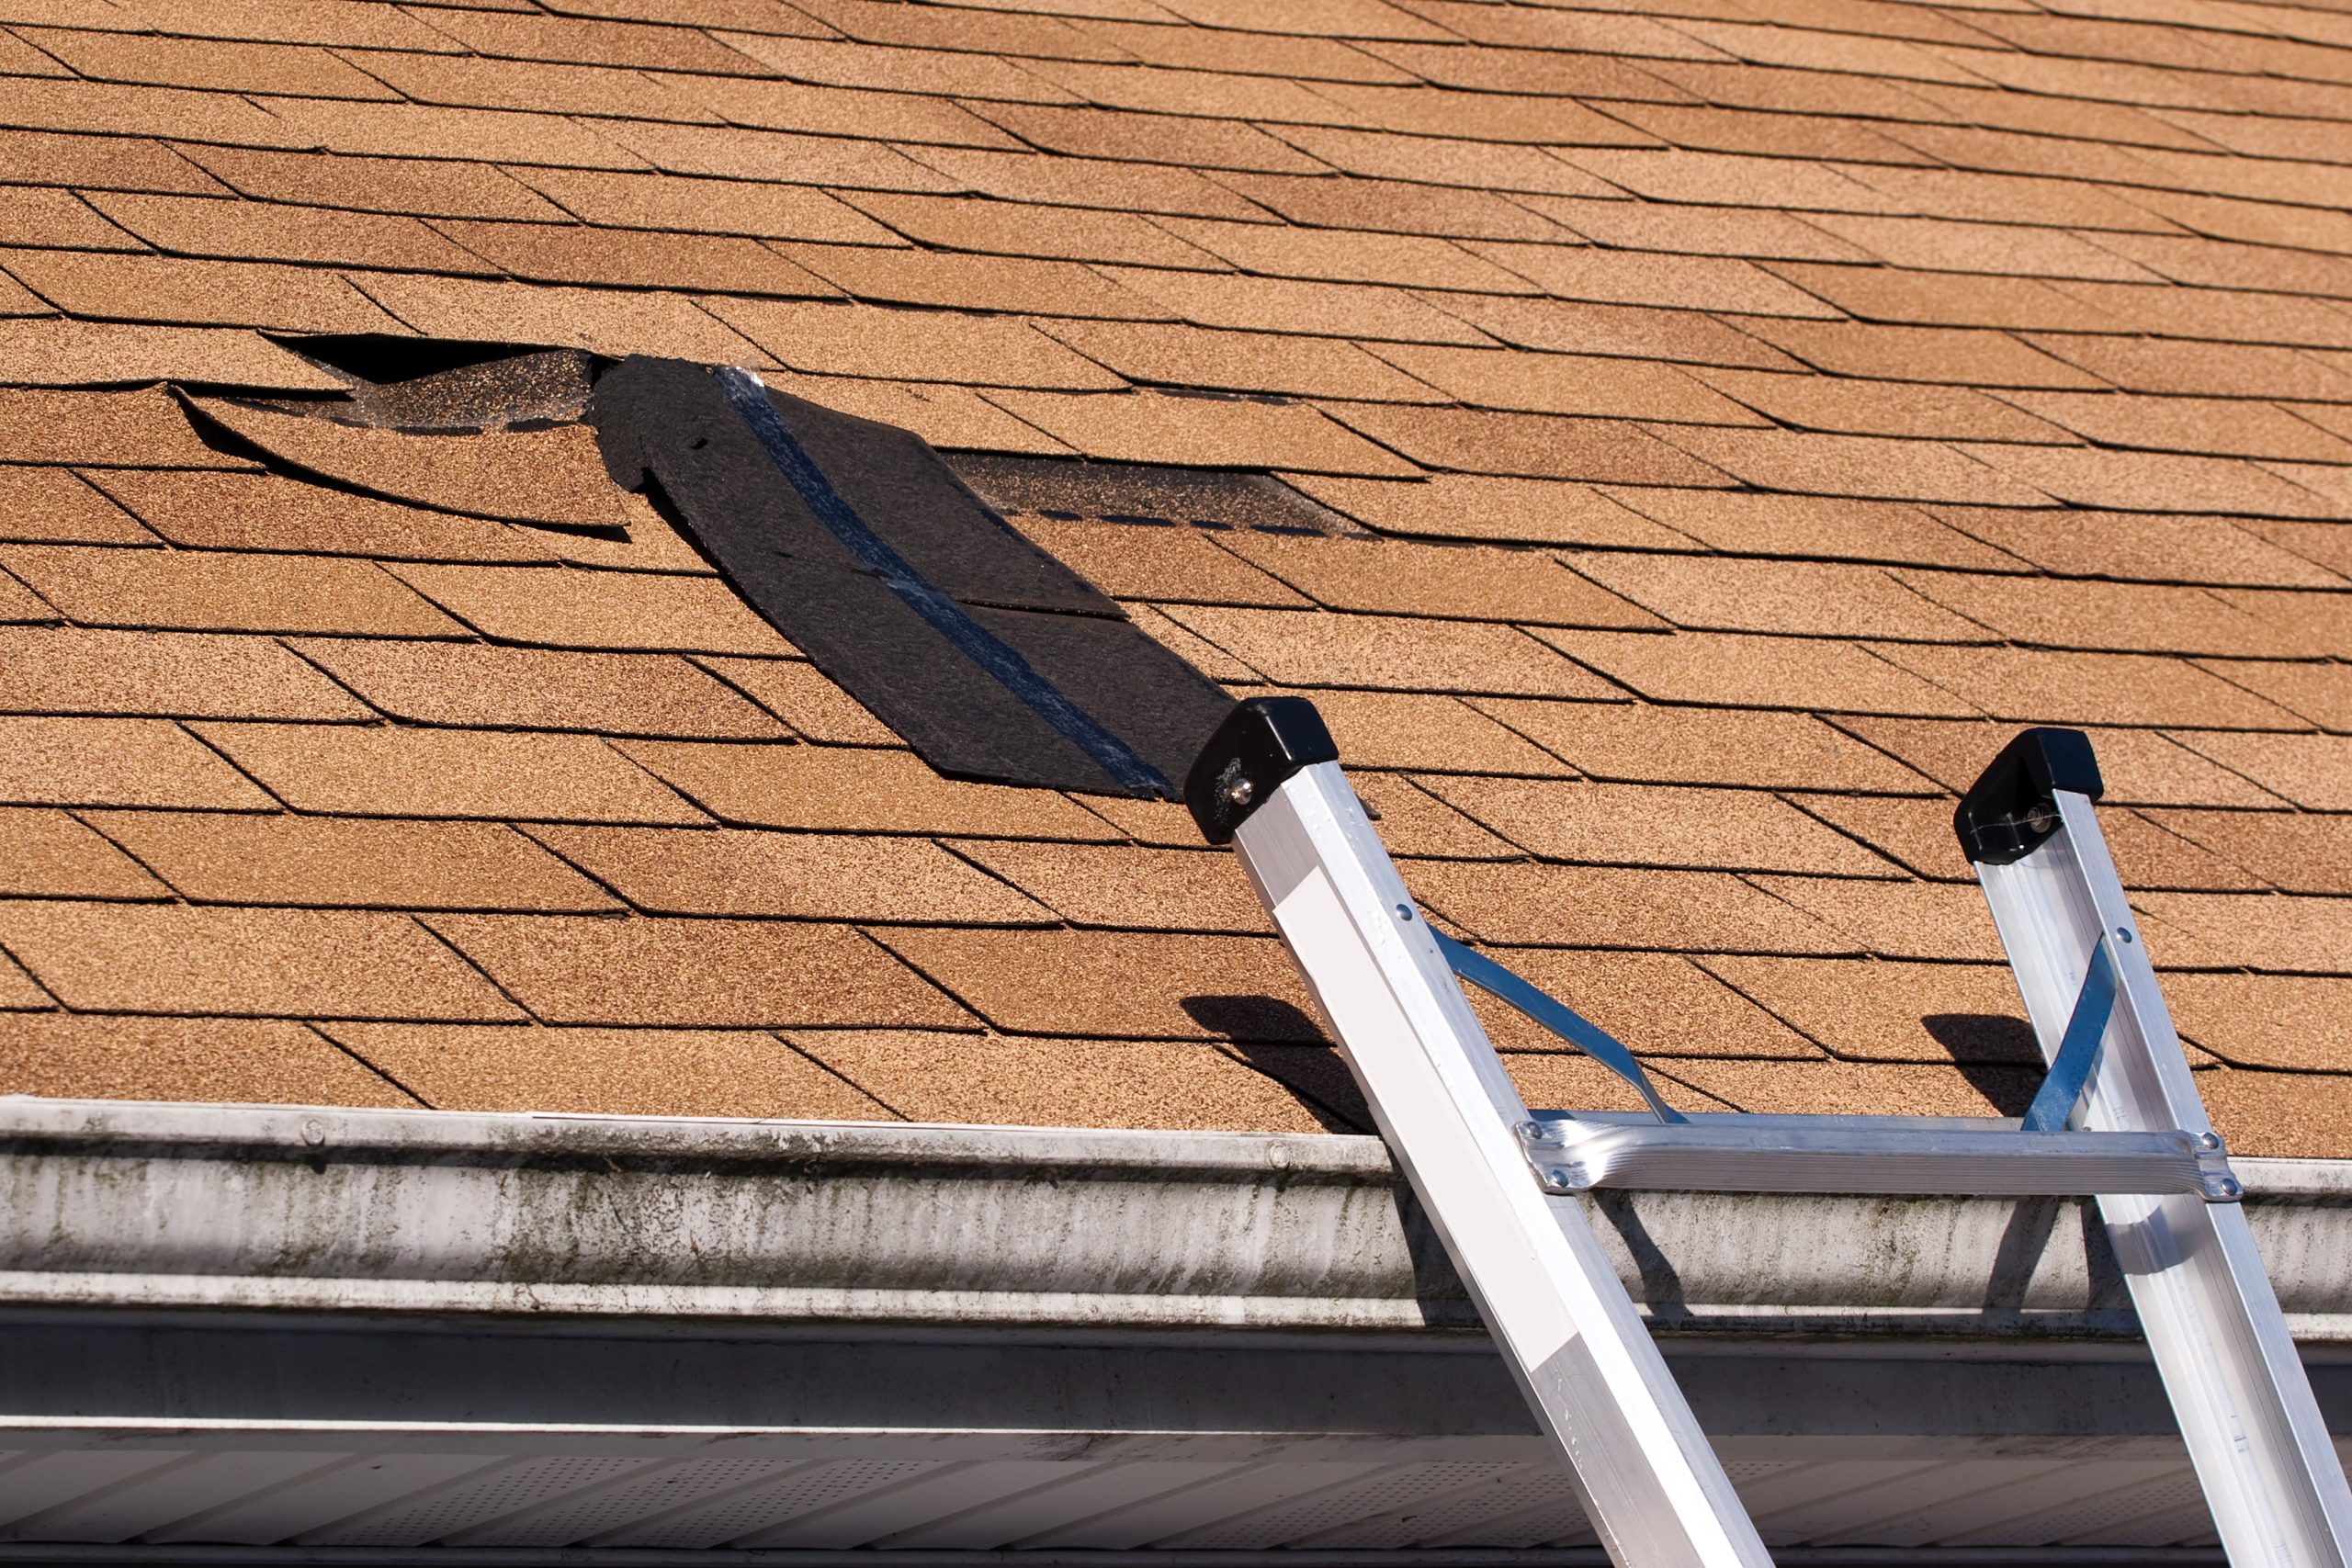 residential shingle roof in need of repair